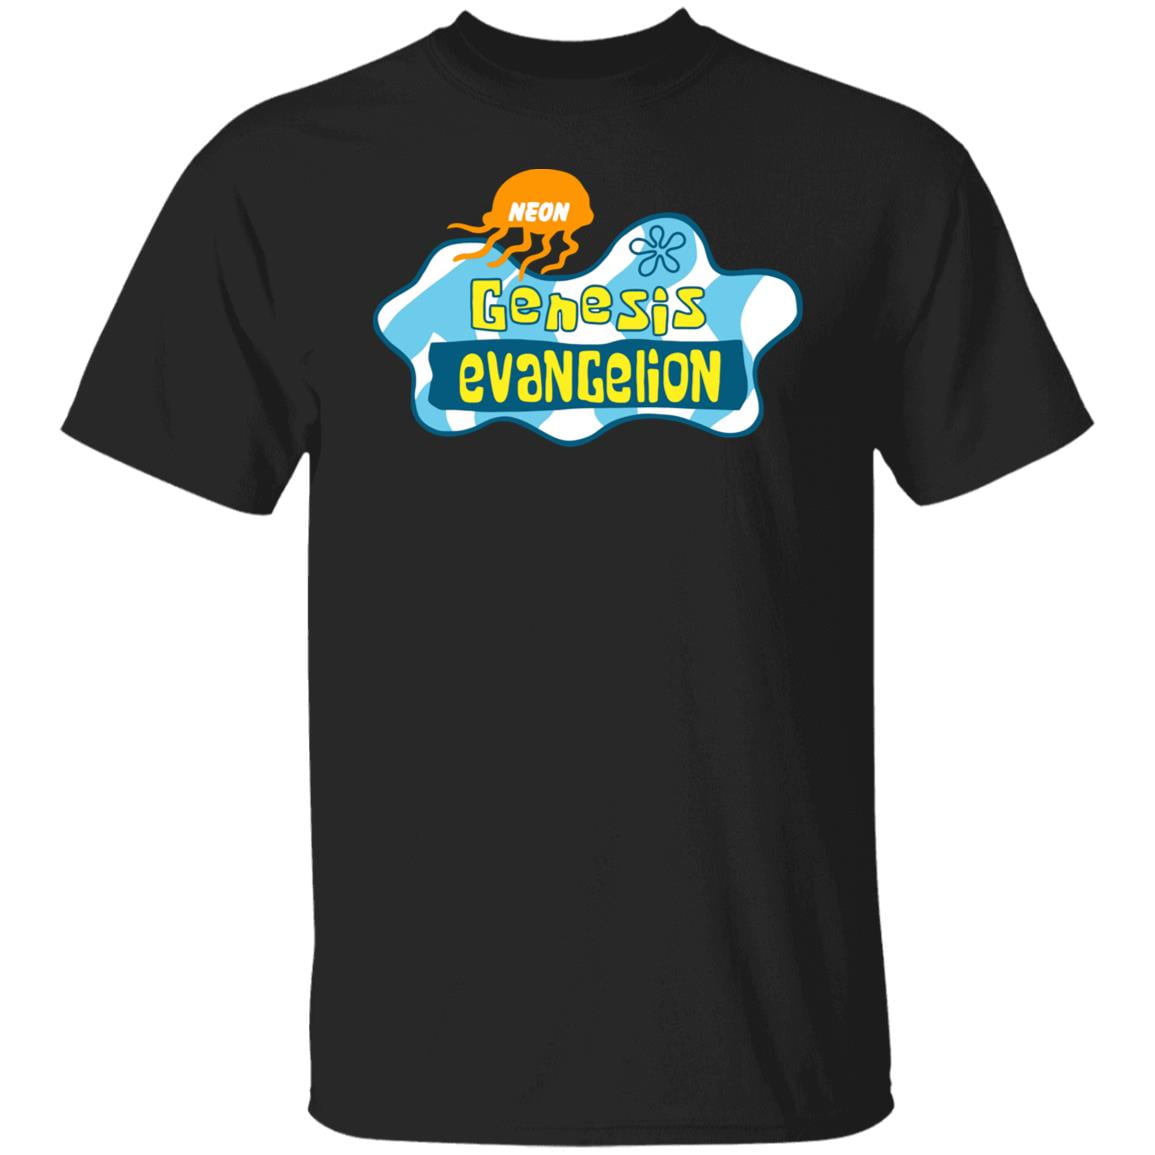 Posts To Show To A Small Victorian Child Neon Genesis Evangelion T-Shirt Hoodie Sweatshirt